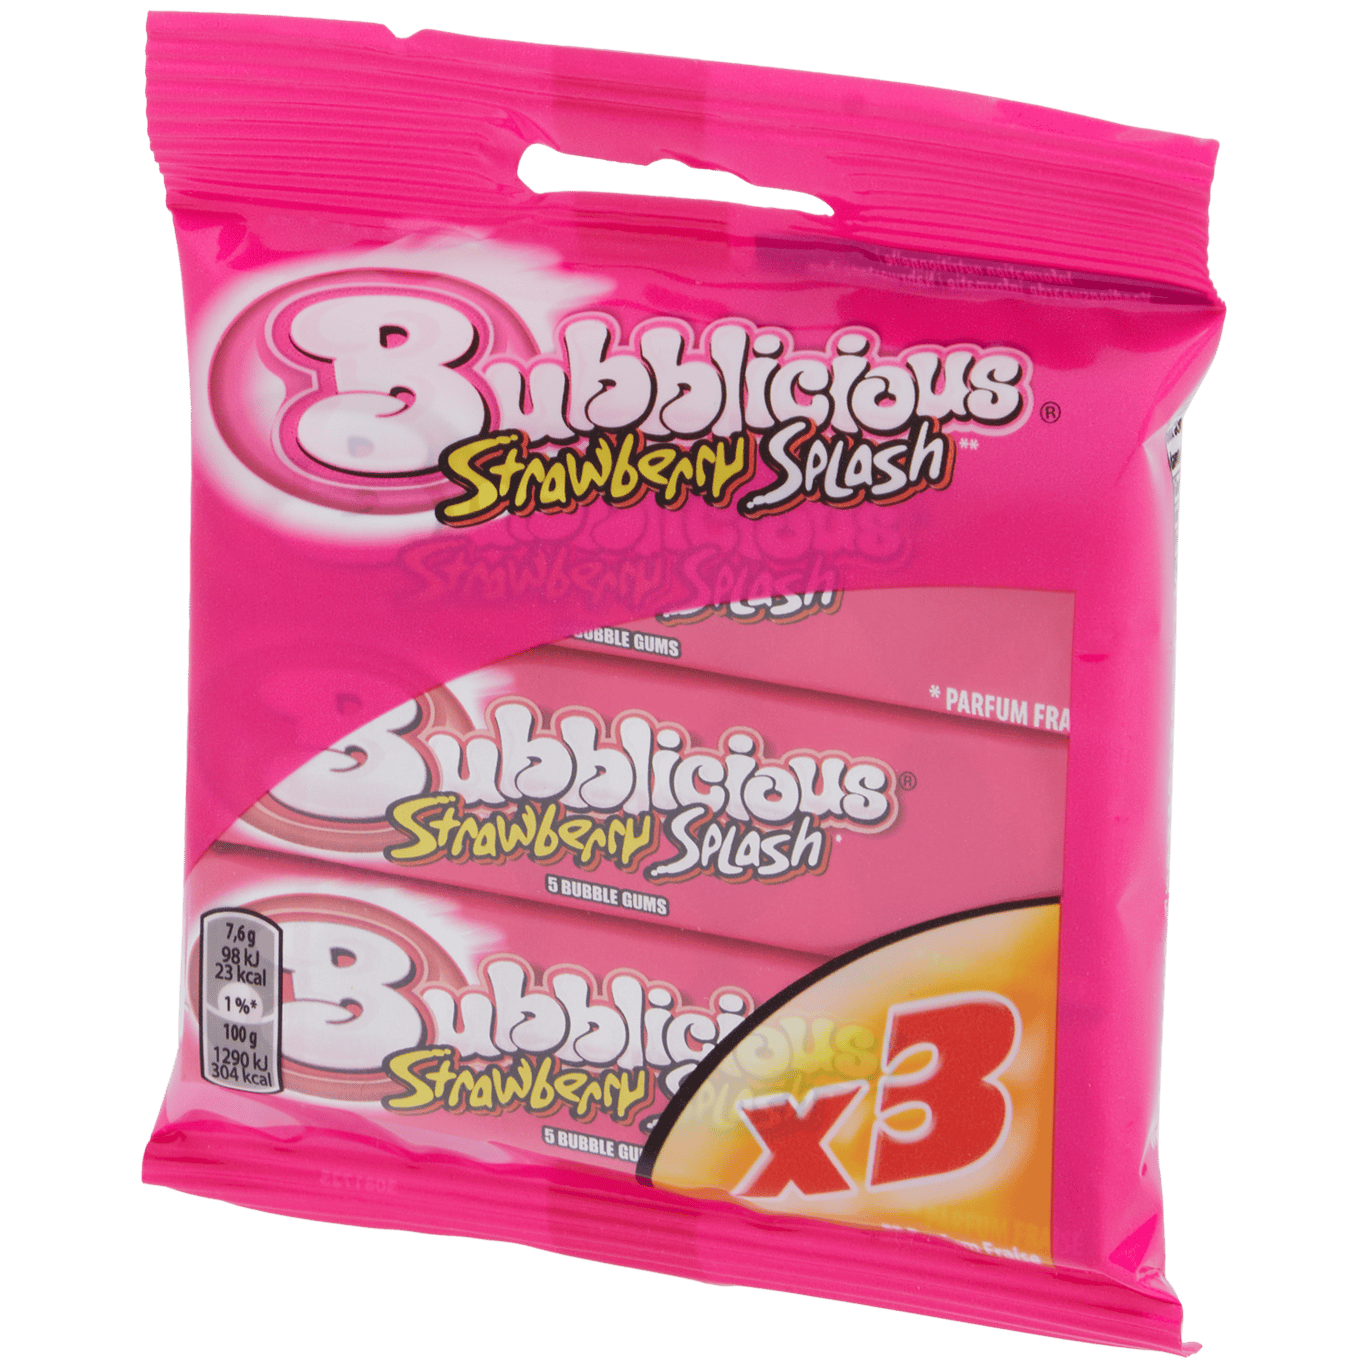 Chewing-gum Bubblicious Strawberry Splash